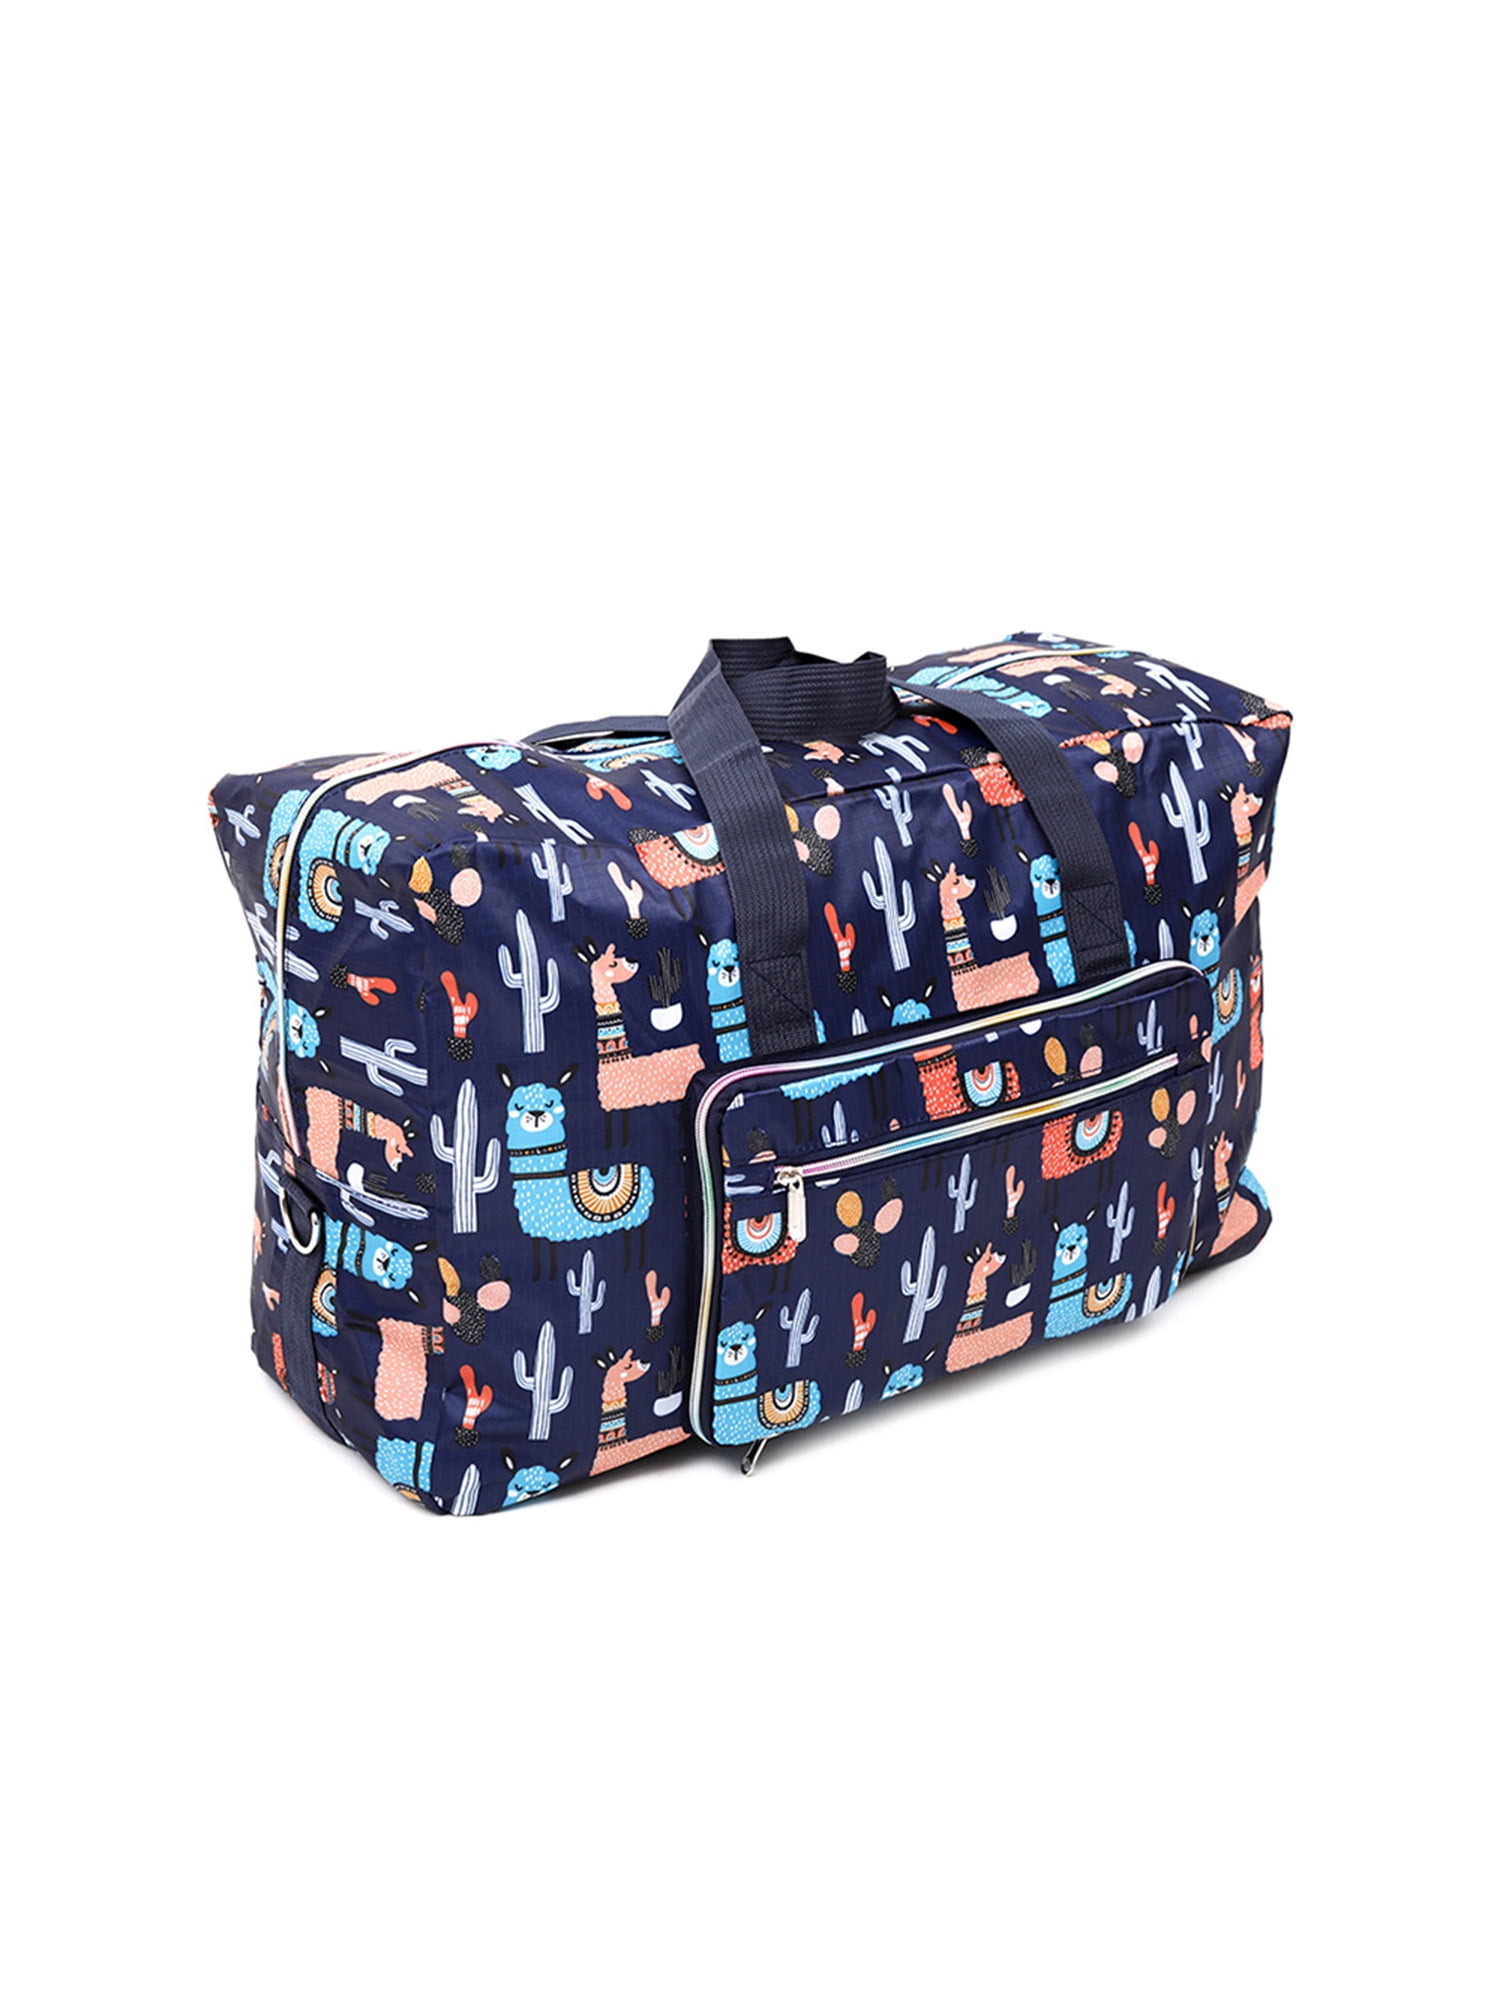 Travel Luggage Bag Large Duffel Bag Women Bags Fashion Ladies